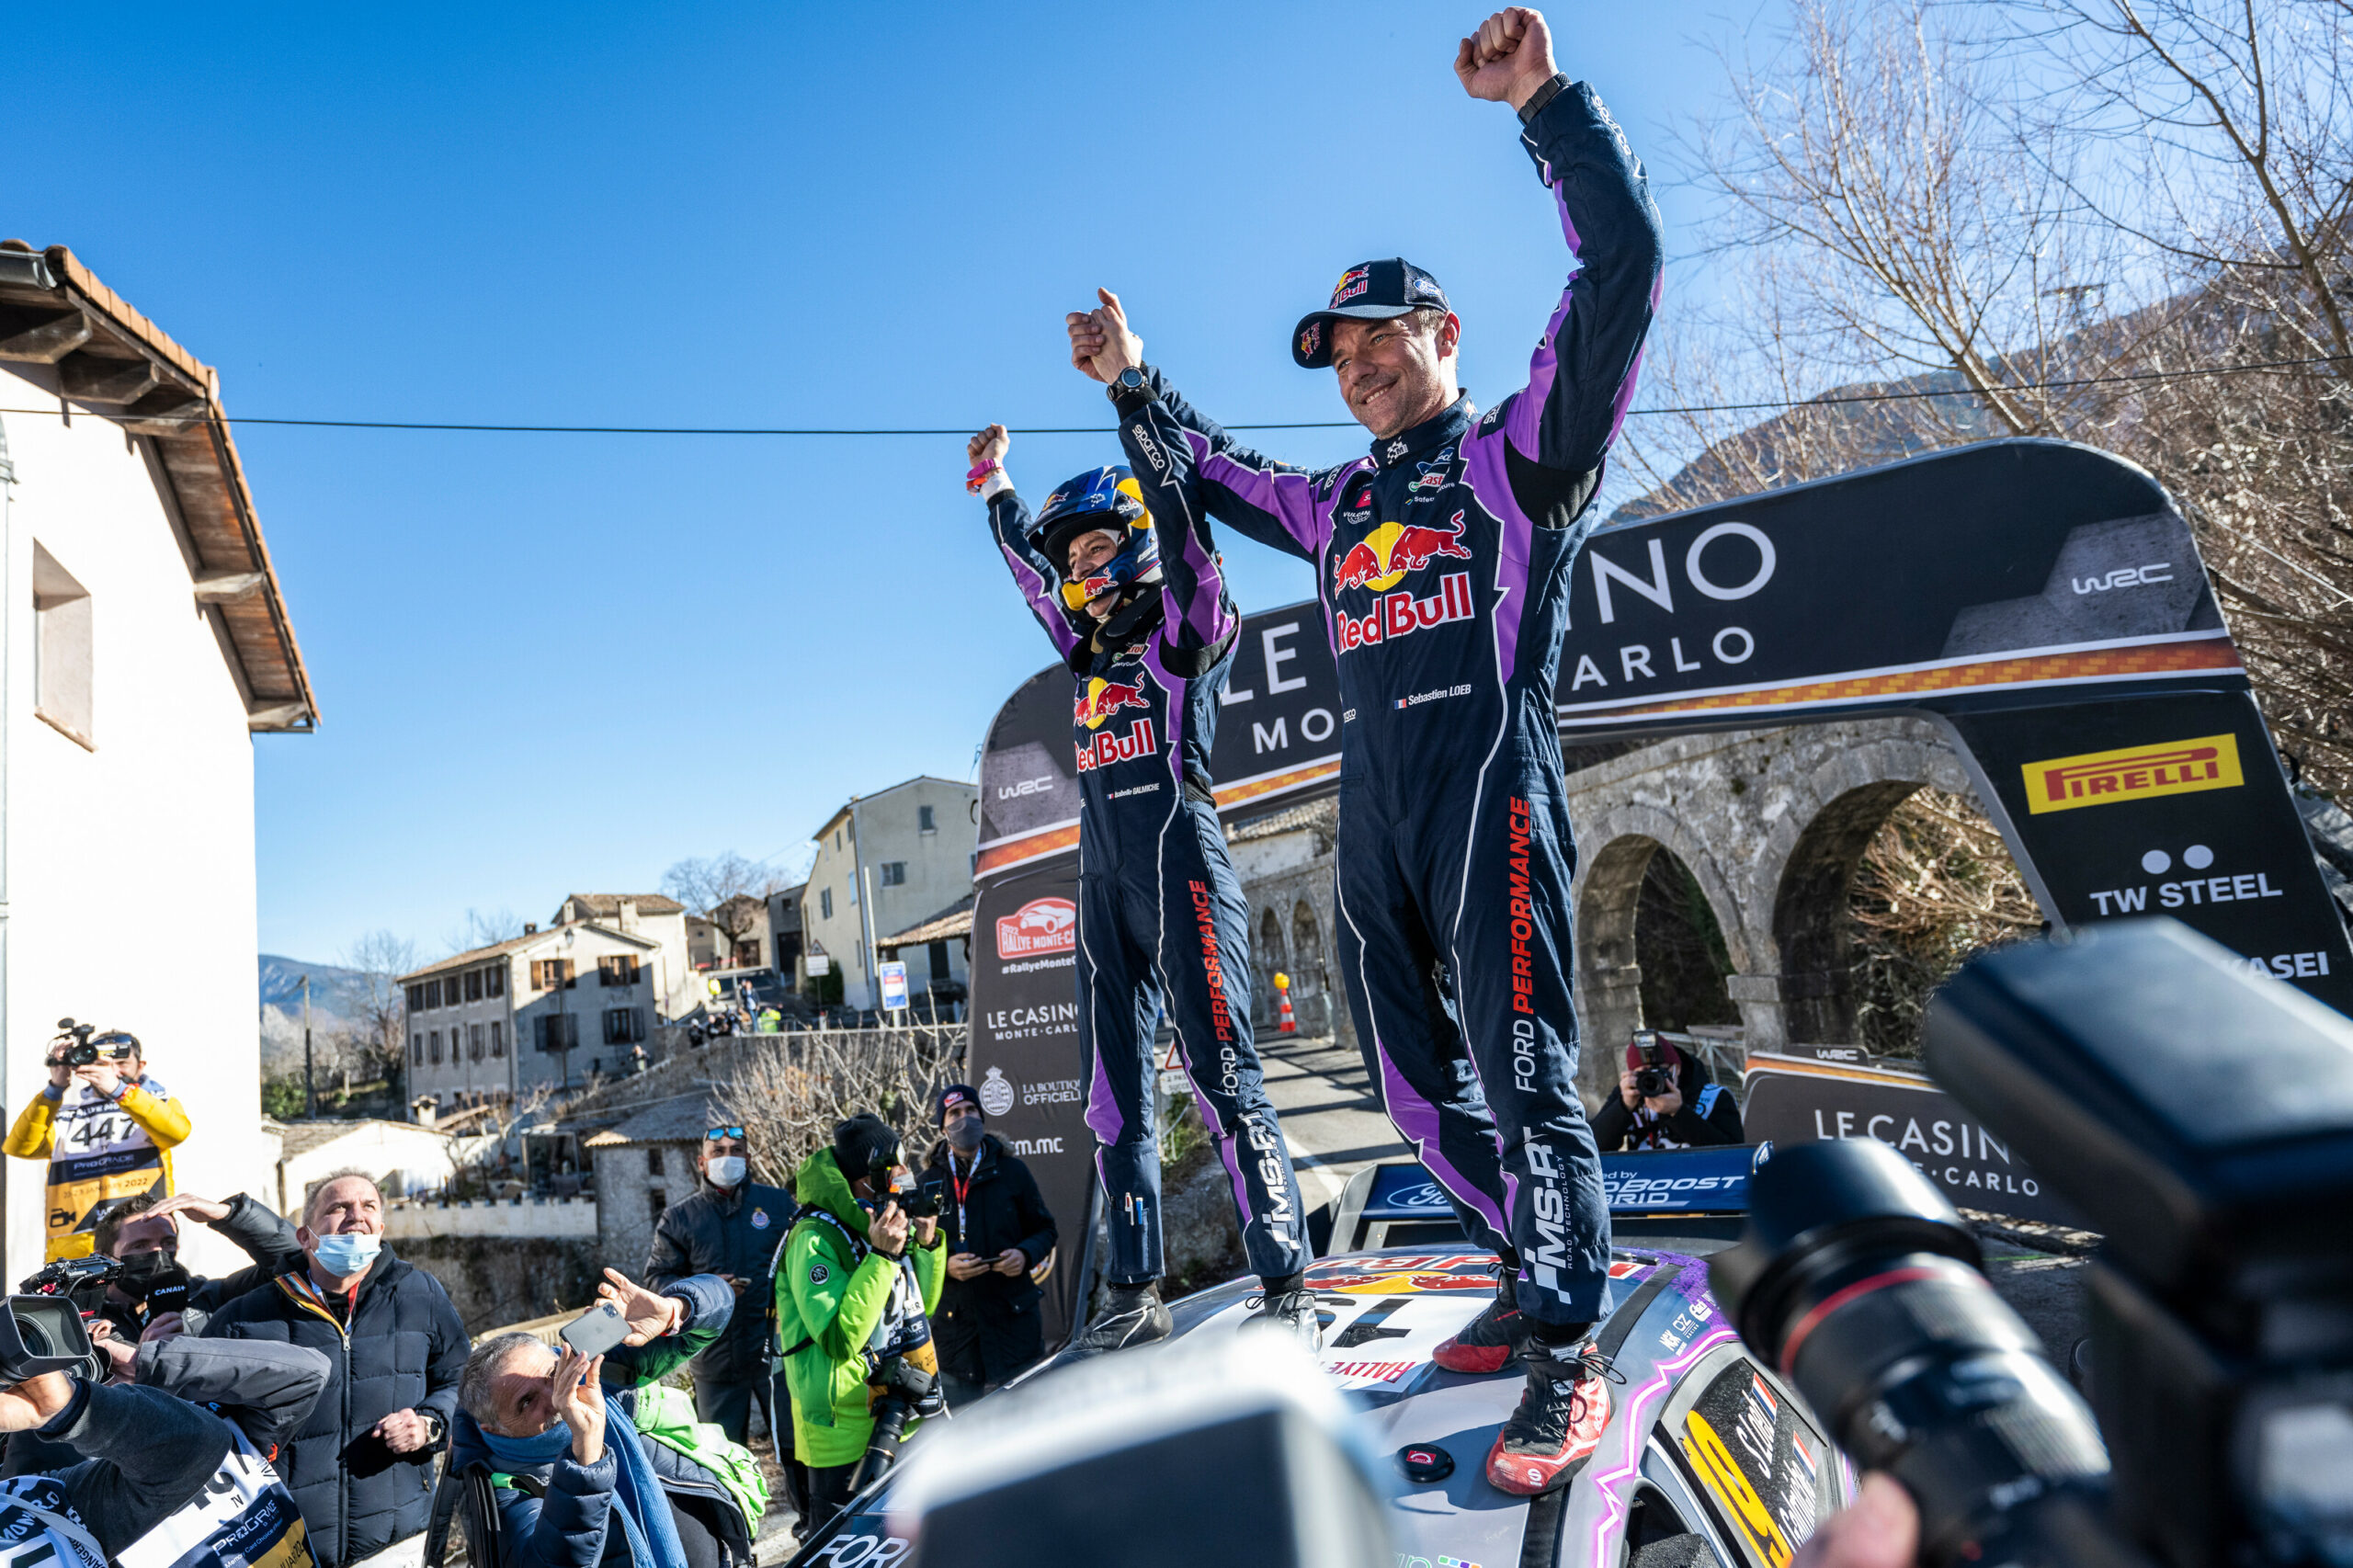 9-time champion Sebastien Loeb is World Rally Championship's